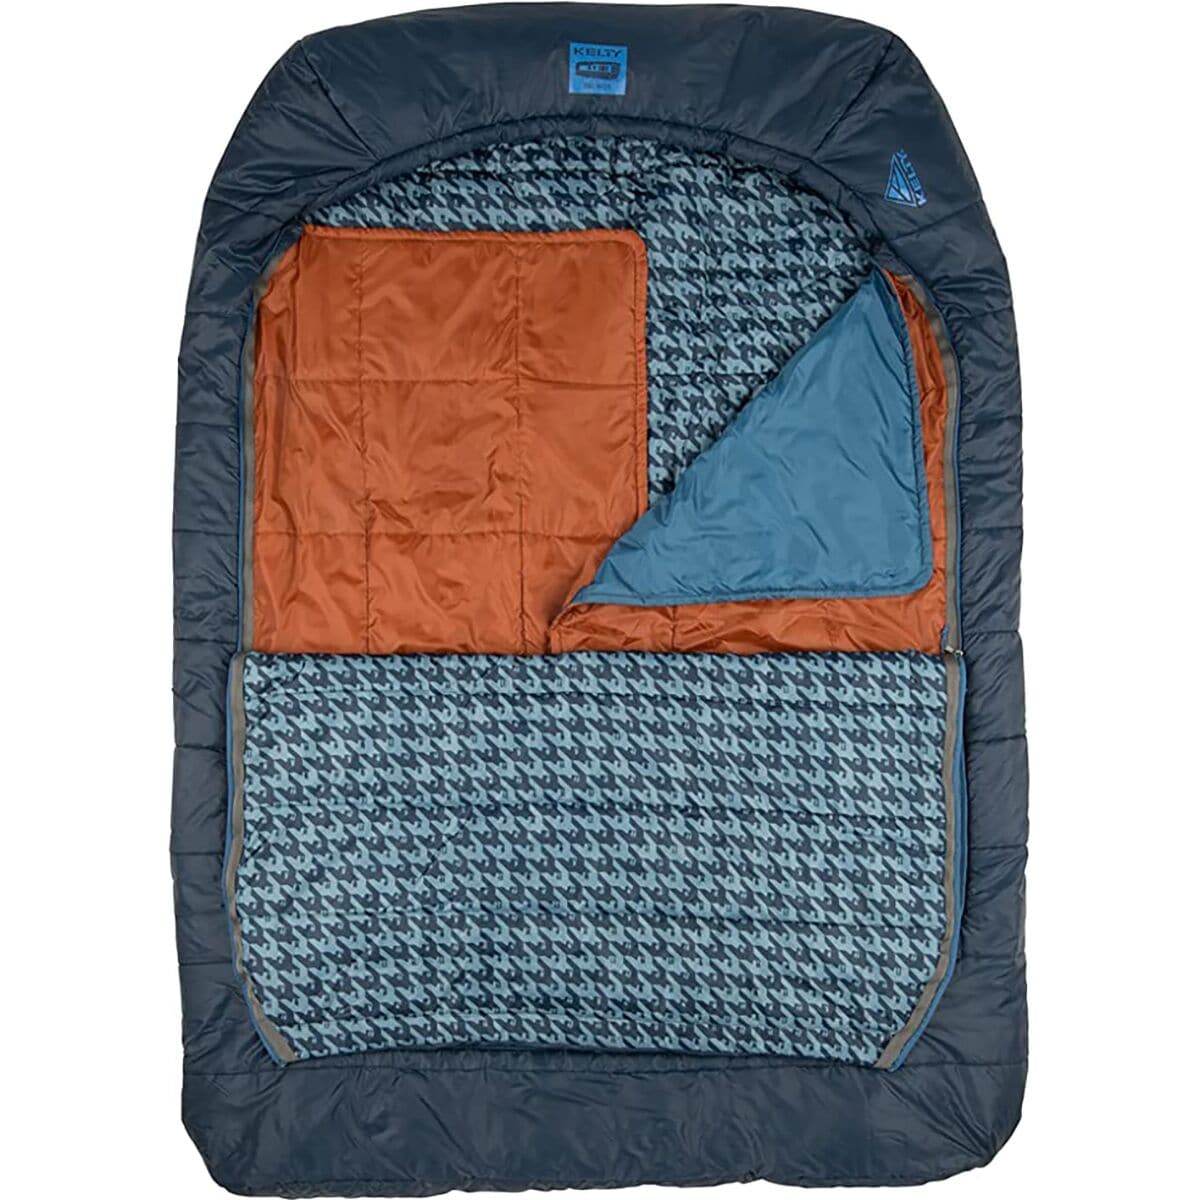 Kelty Tru.Comfort Doublewide Sleeping Bag: 20F Synthetic